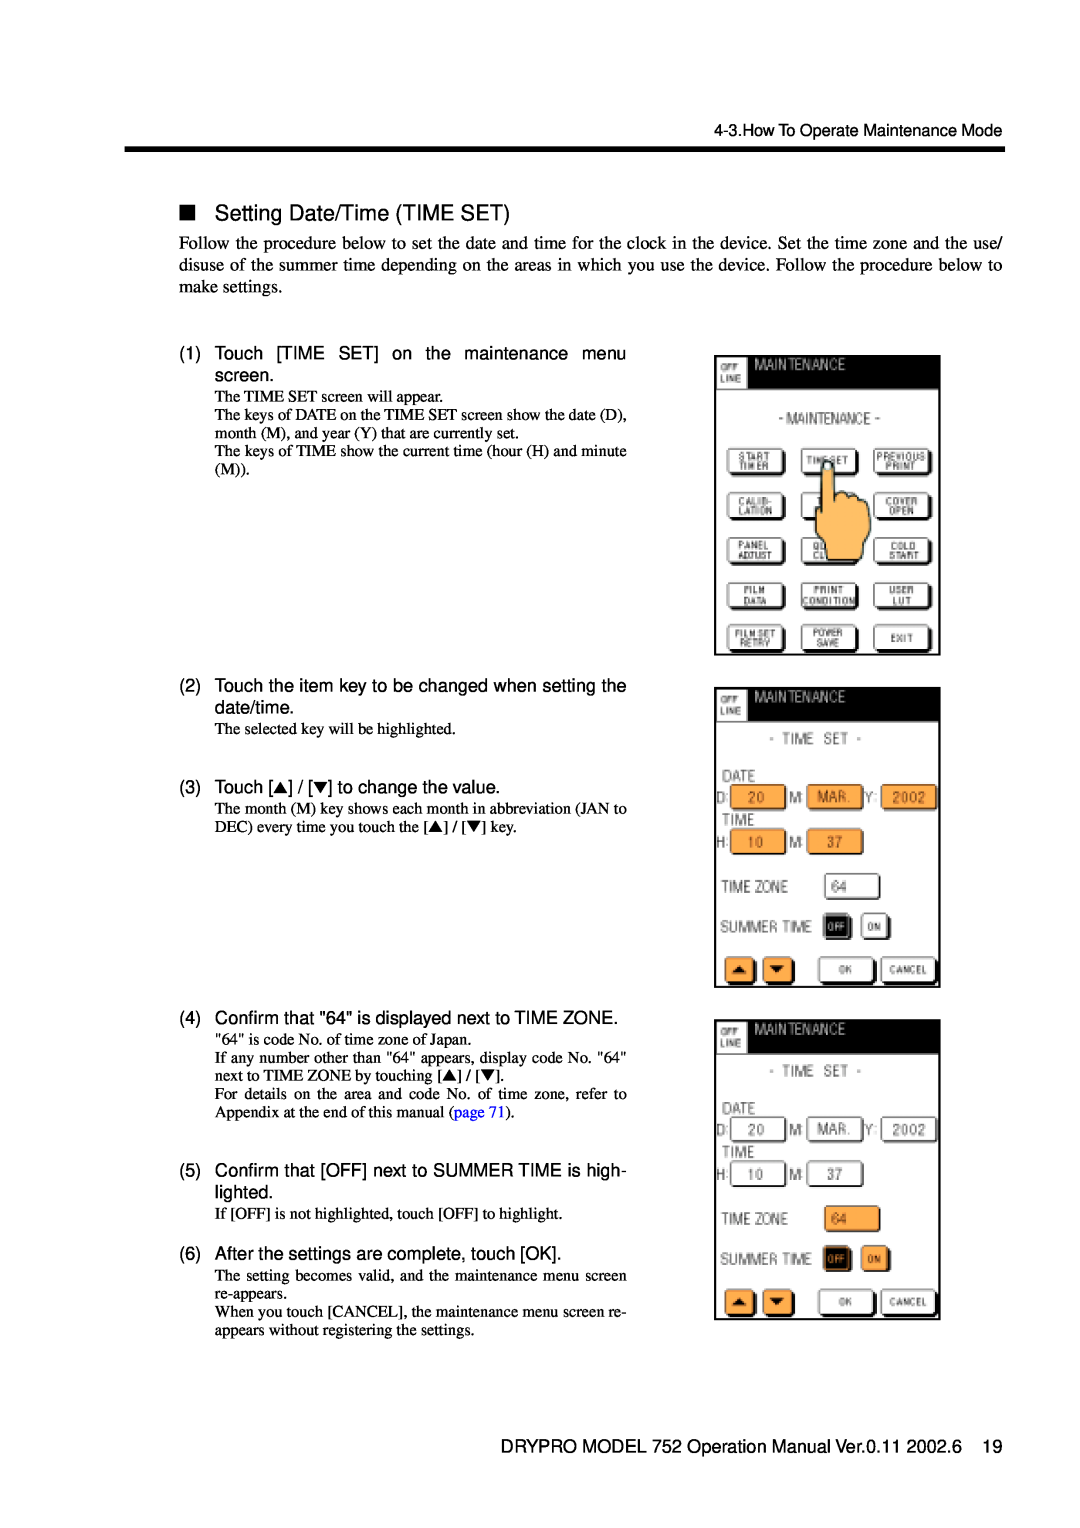 Konica Minolta 752 operation manual Setting Date/Time TIME SET 